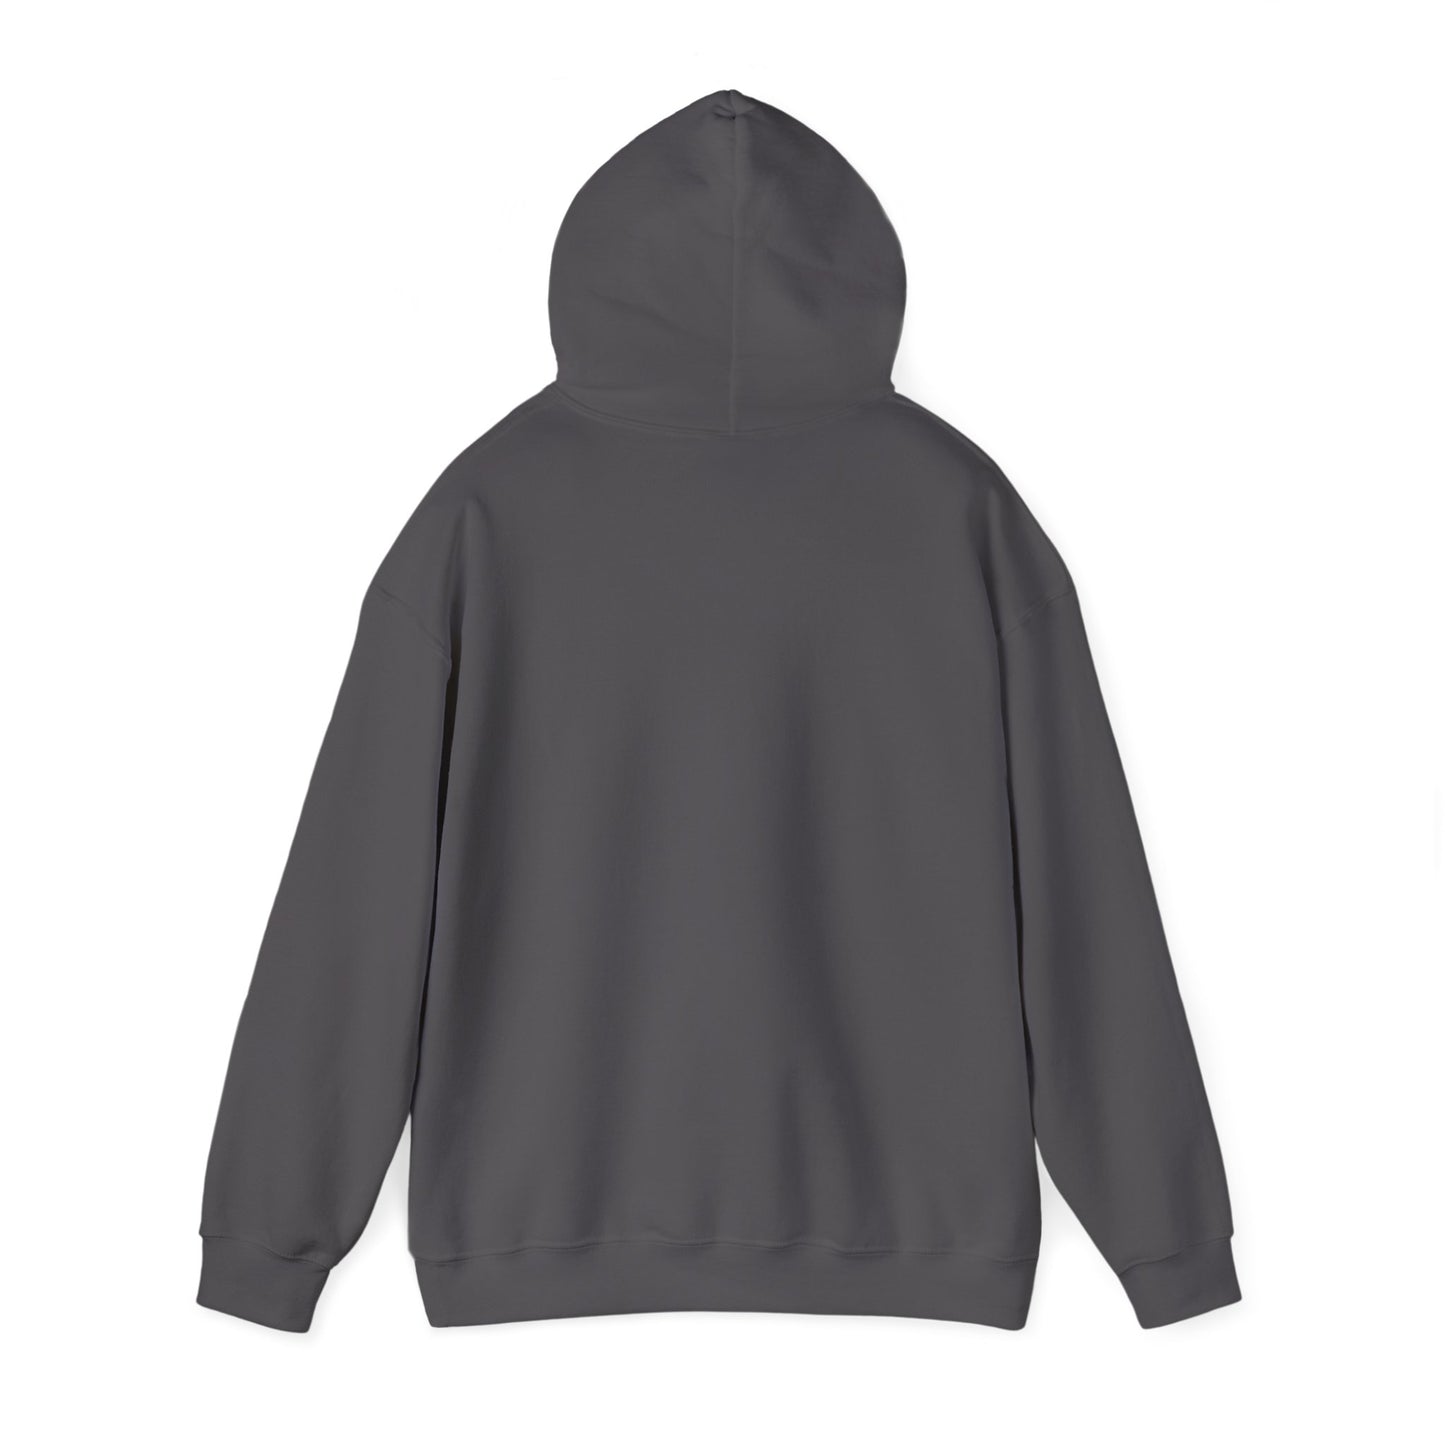 Blessings Unisex Heavy Blend™ Hooded Sweatshirt